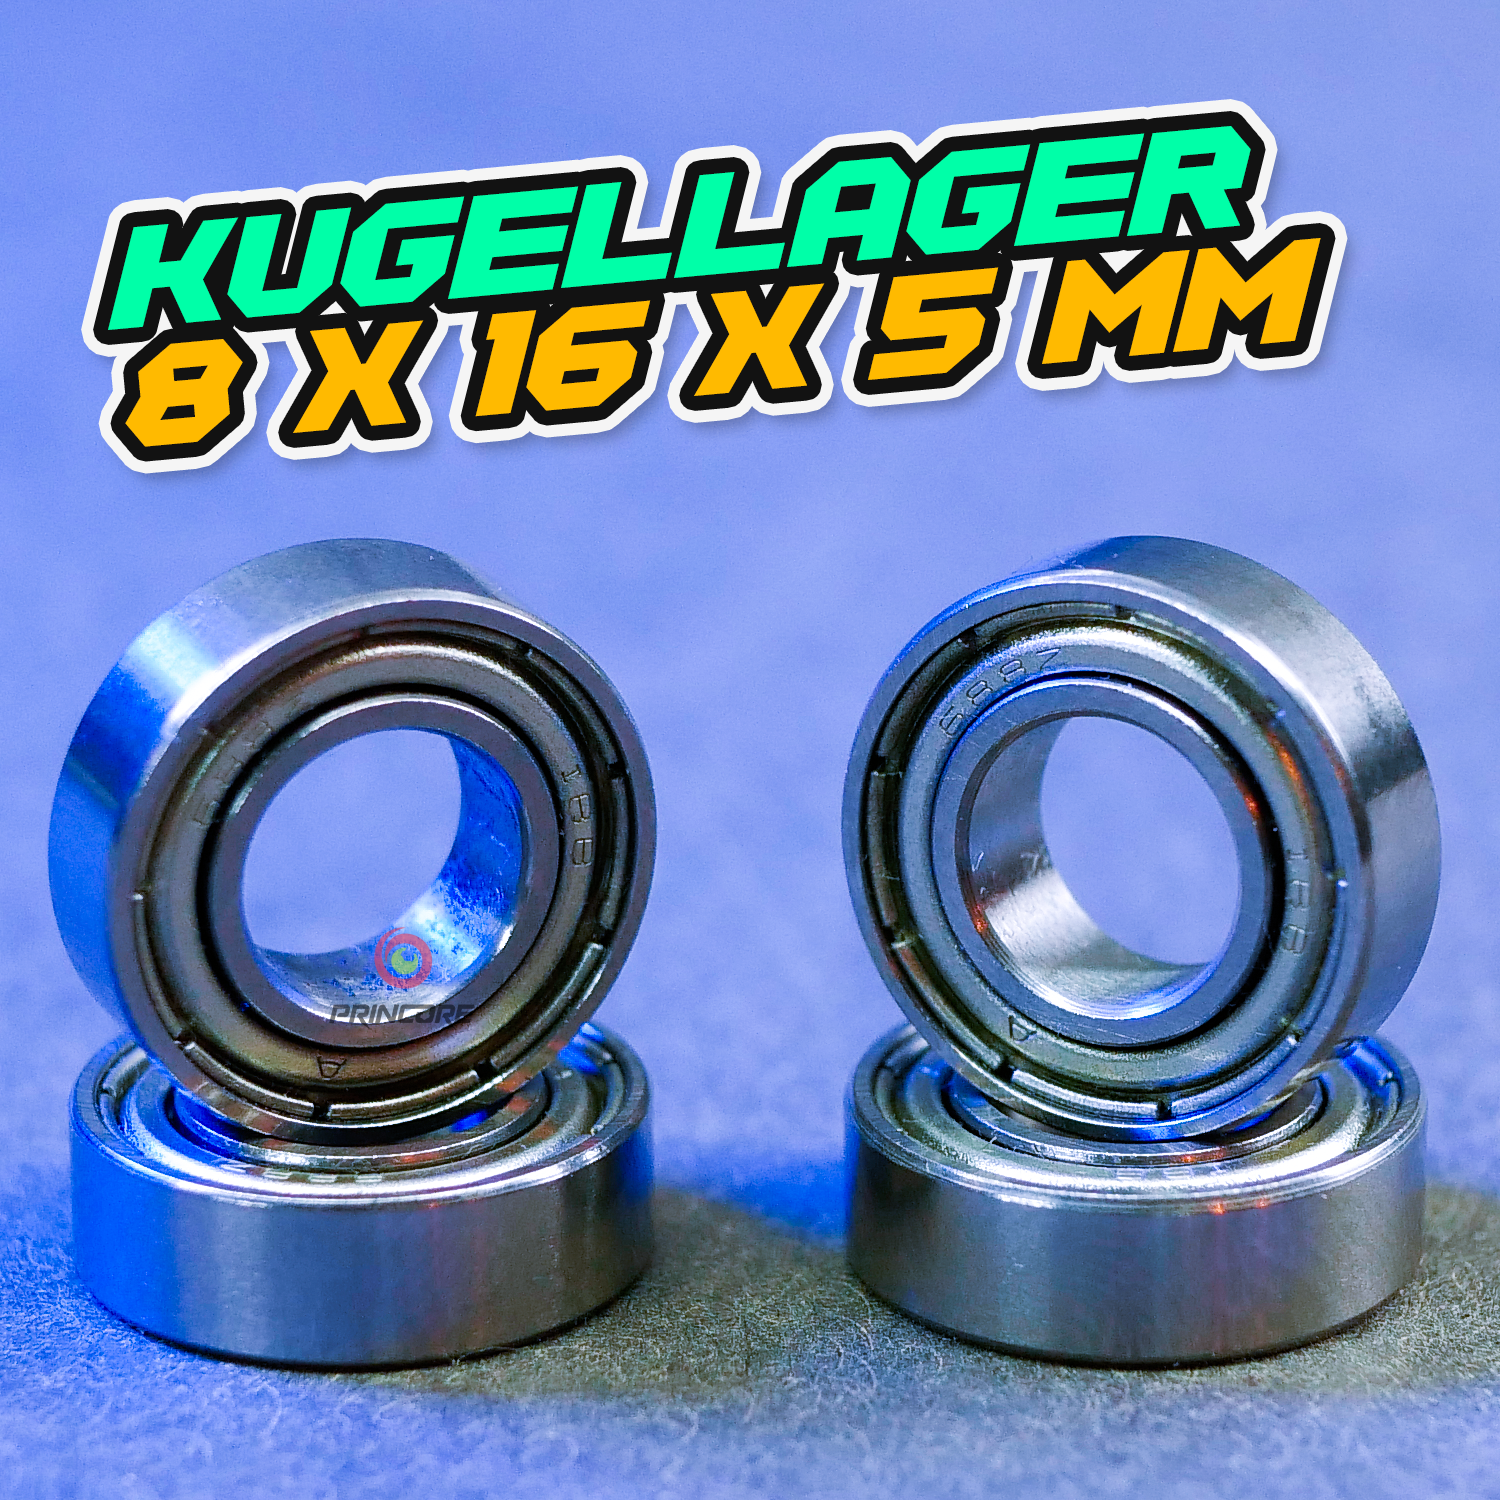 Kugellager 8x16x5mm – Princore GmbH